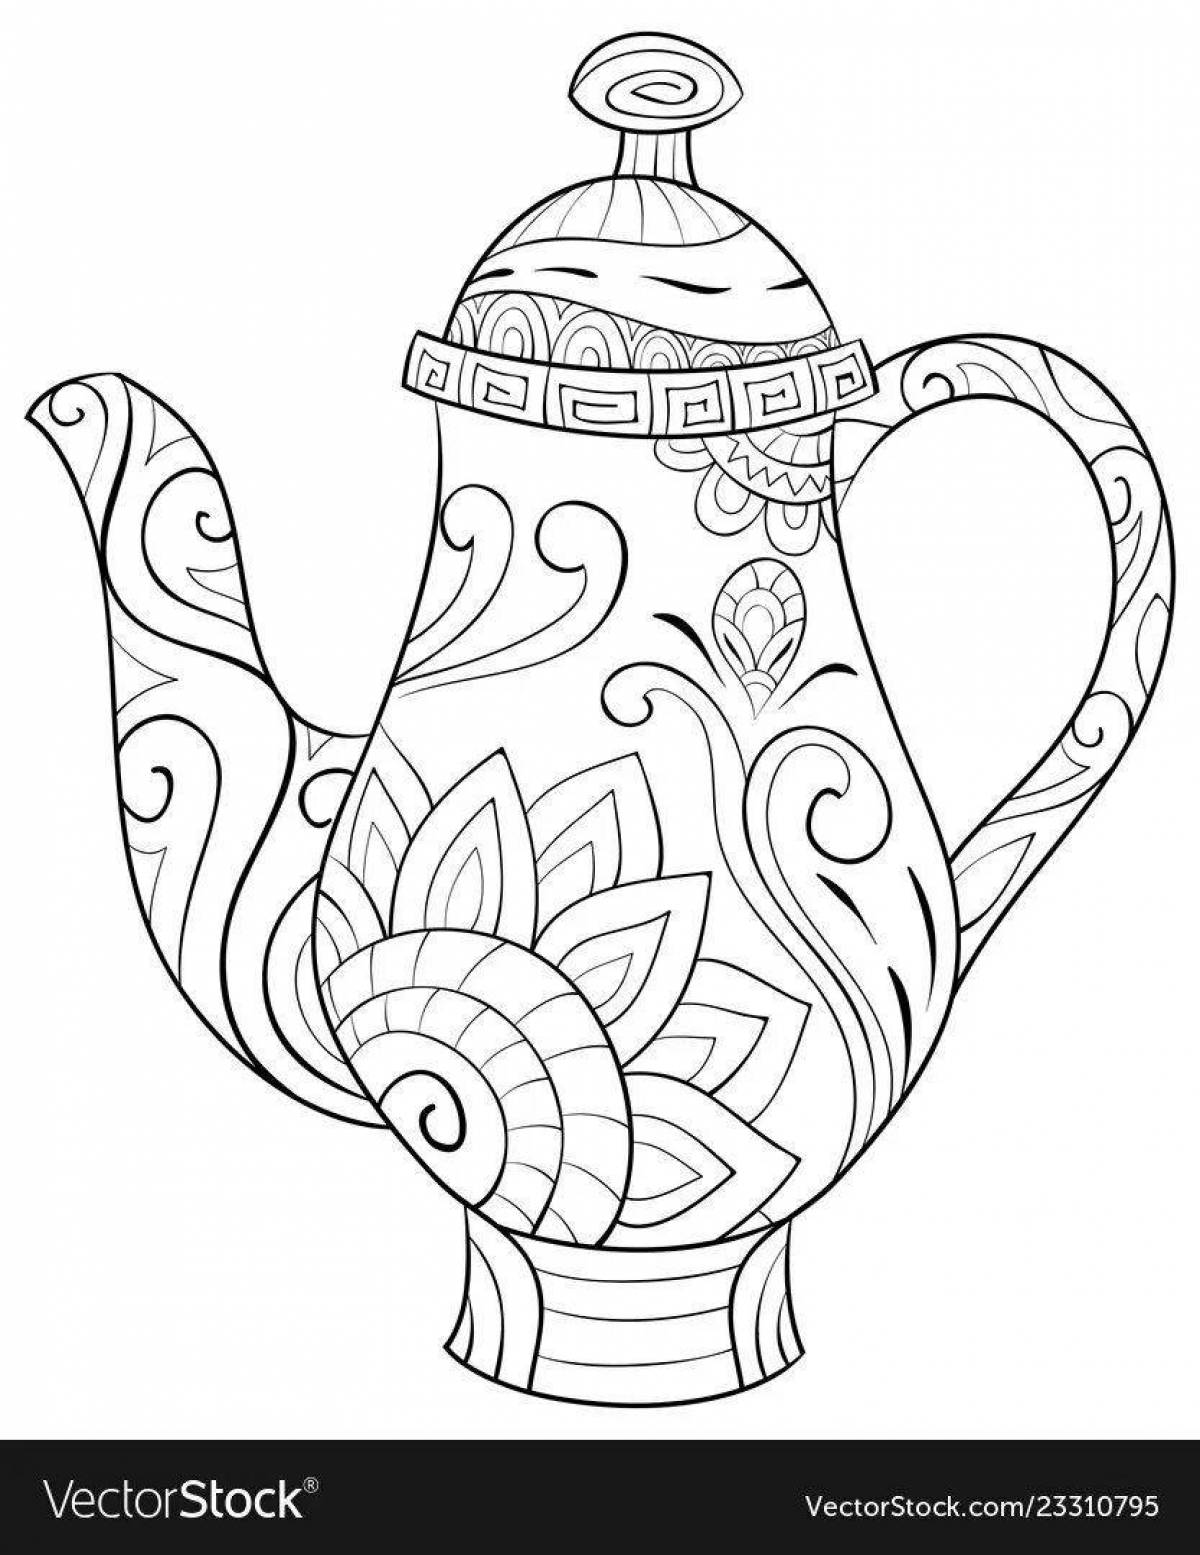 Gzhel teapot coloring book for kids